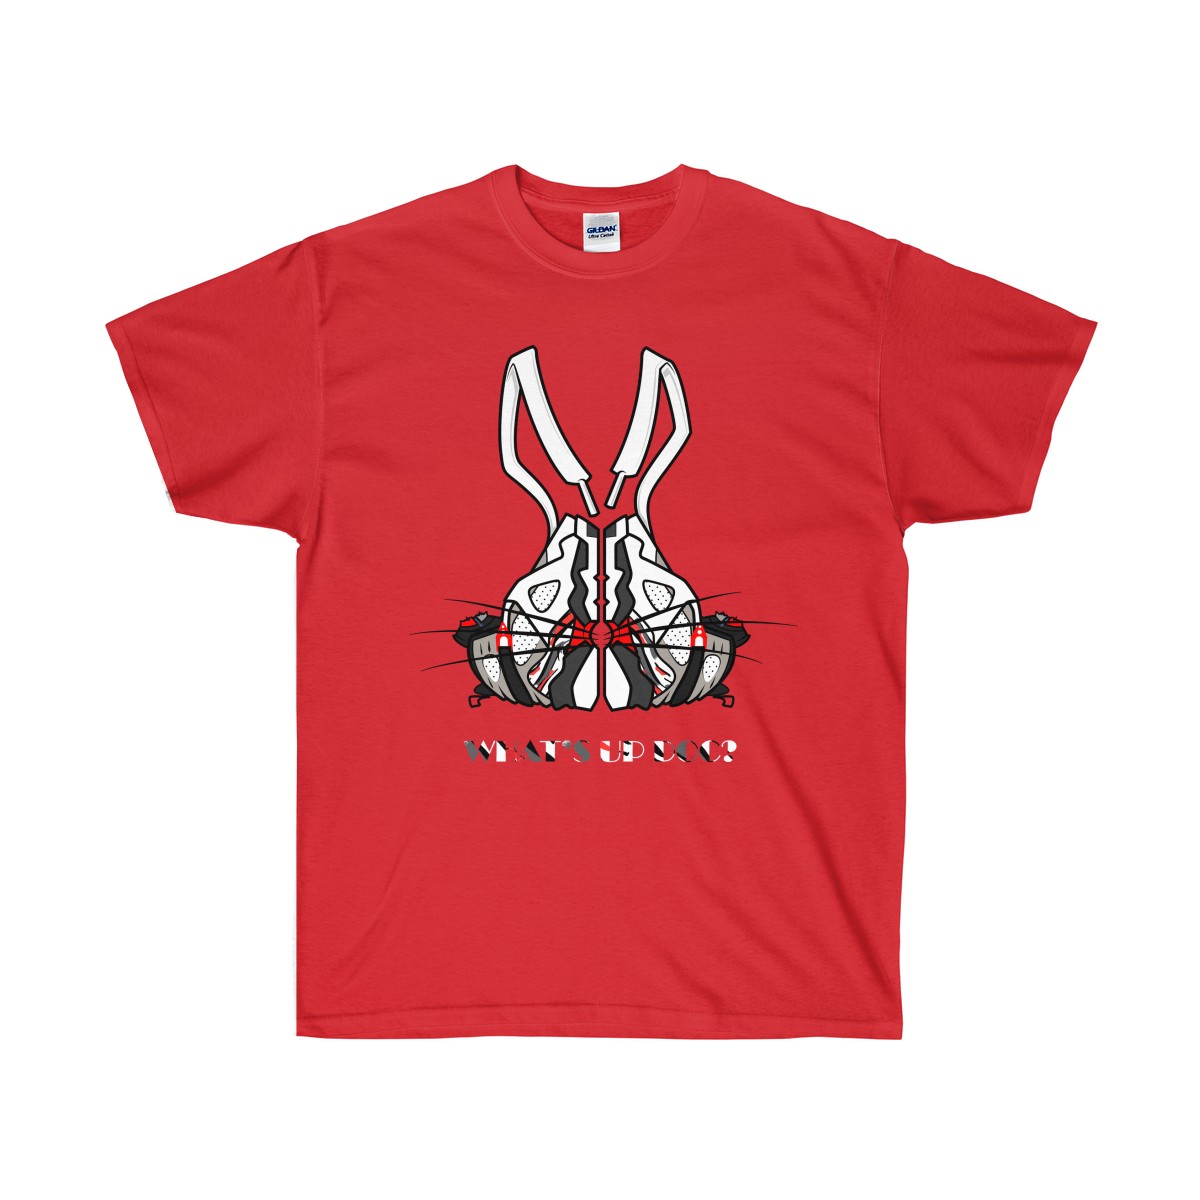 What’s Up Doc? Air Jordan 8 Bugs Bunny Hook-Up T-Shirt